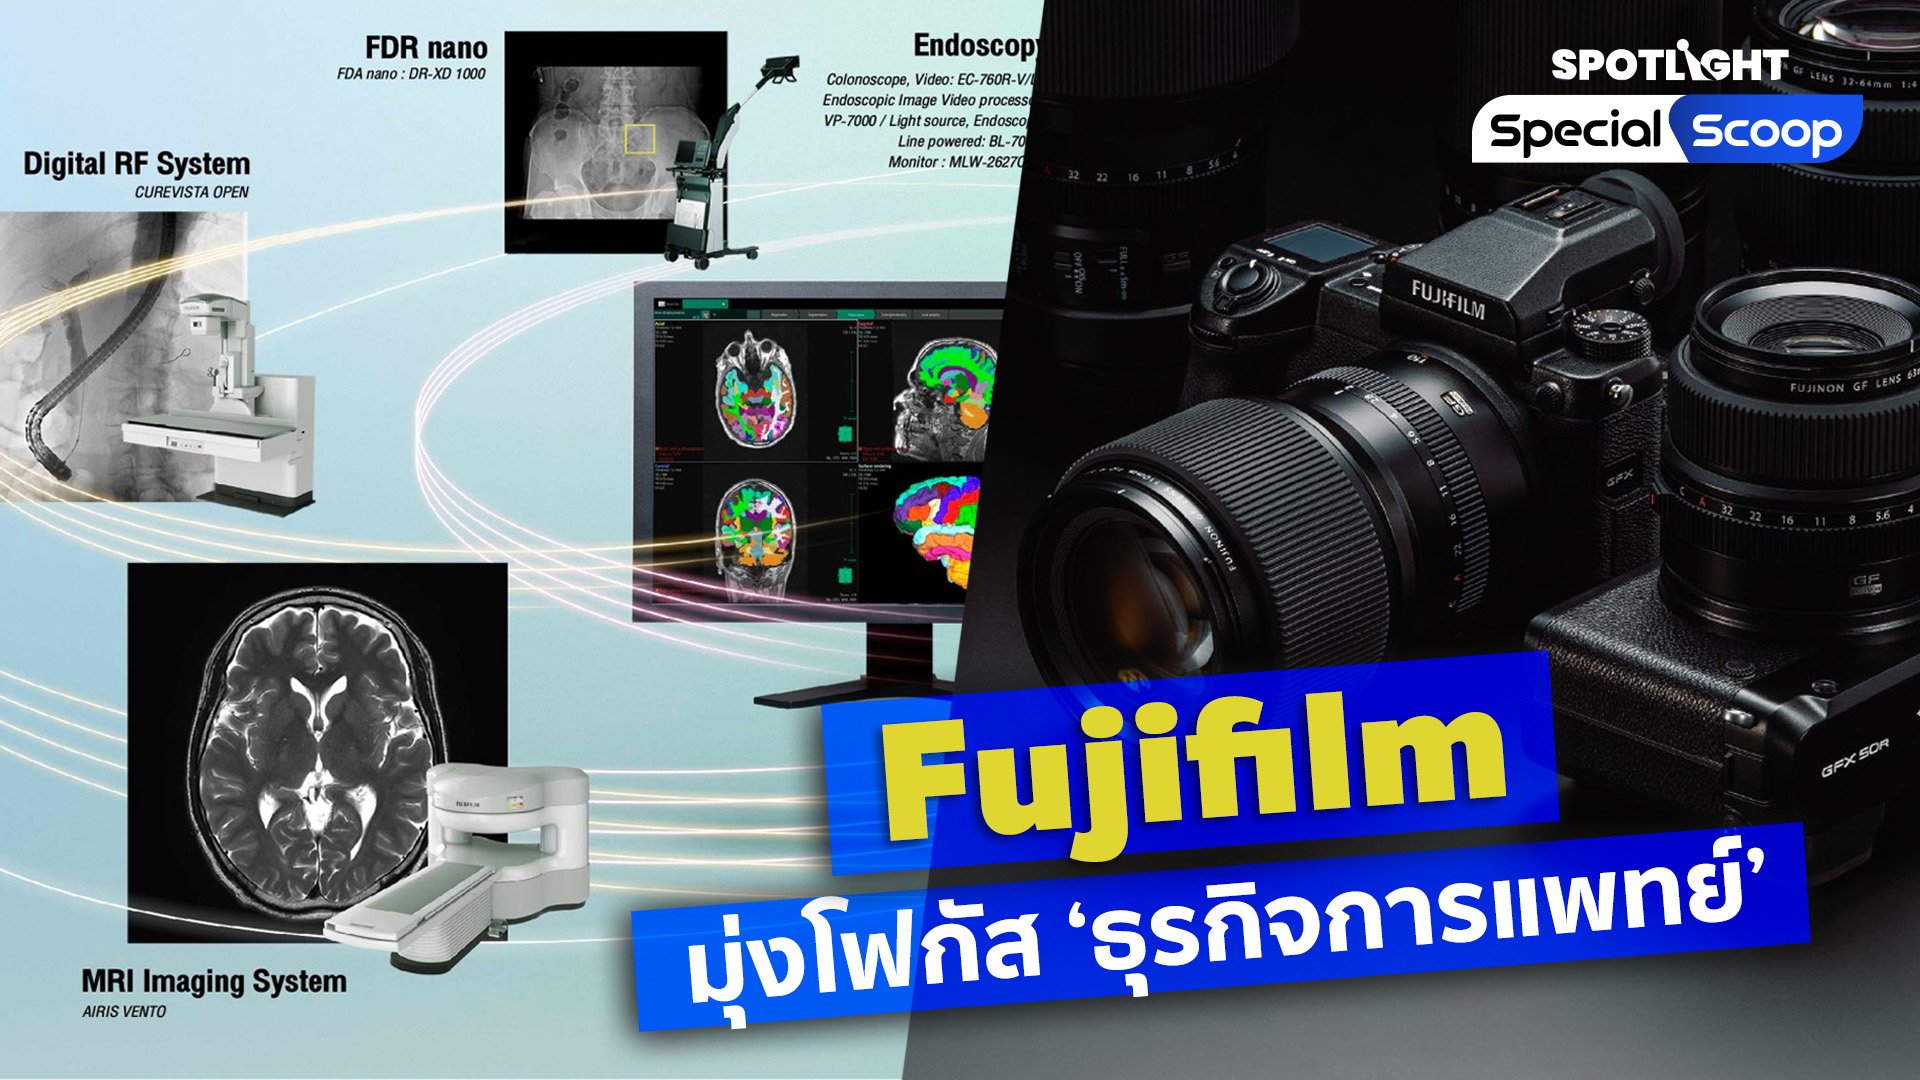 Fujifilm มุ่งโฟกัส ‘ธุรกิจการแพทย์’ | Spotlight | 4 มี.ค. 66 | AMARIN TVHD34